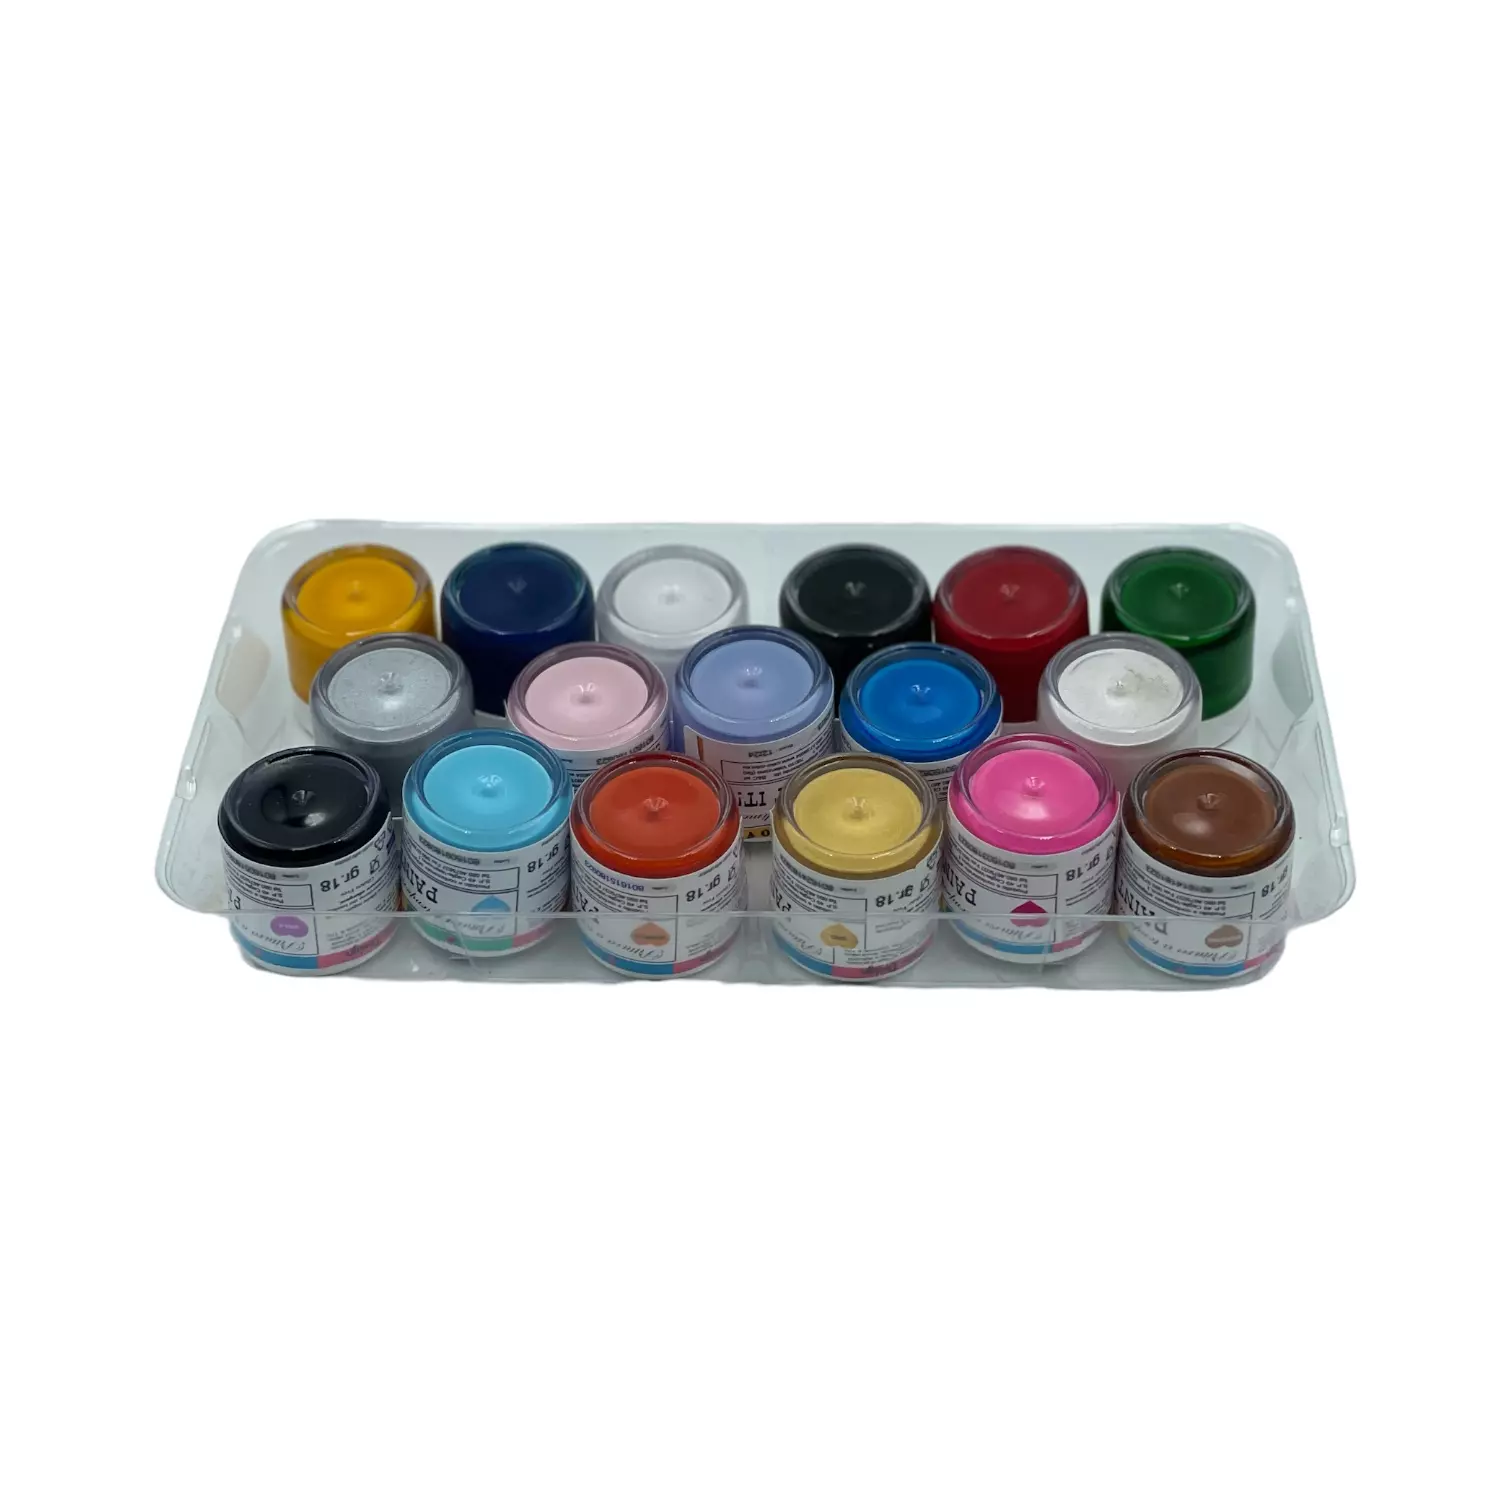 Paint It!Kit - tutti i 14 colori delle nostre Tempere alimentari -  CakeDesignLovers